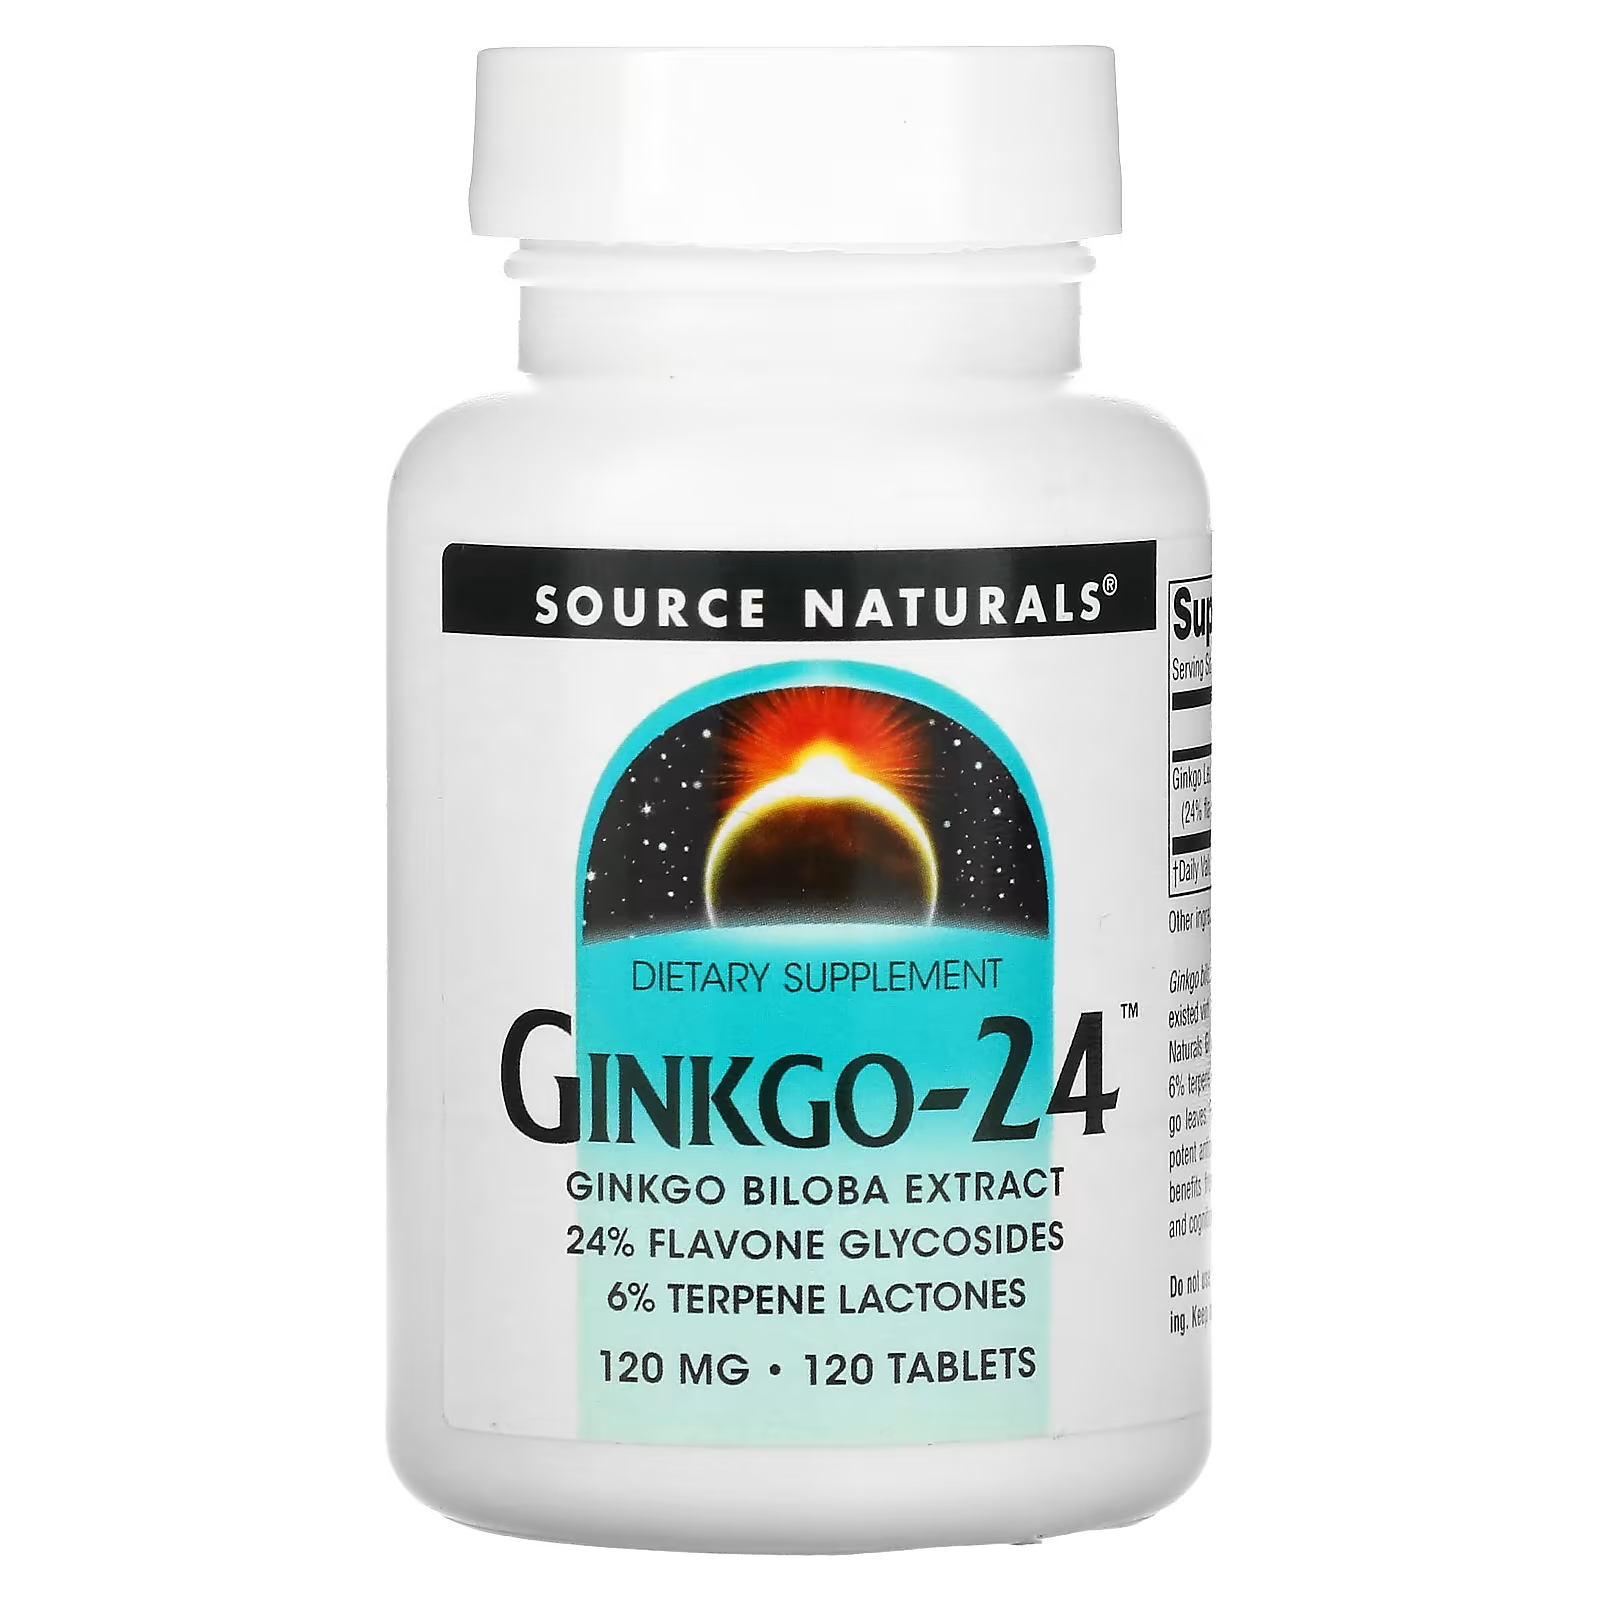 Source Naturals Ginkgo-24 гинкго билоба,120 мг, 120 таблеток